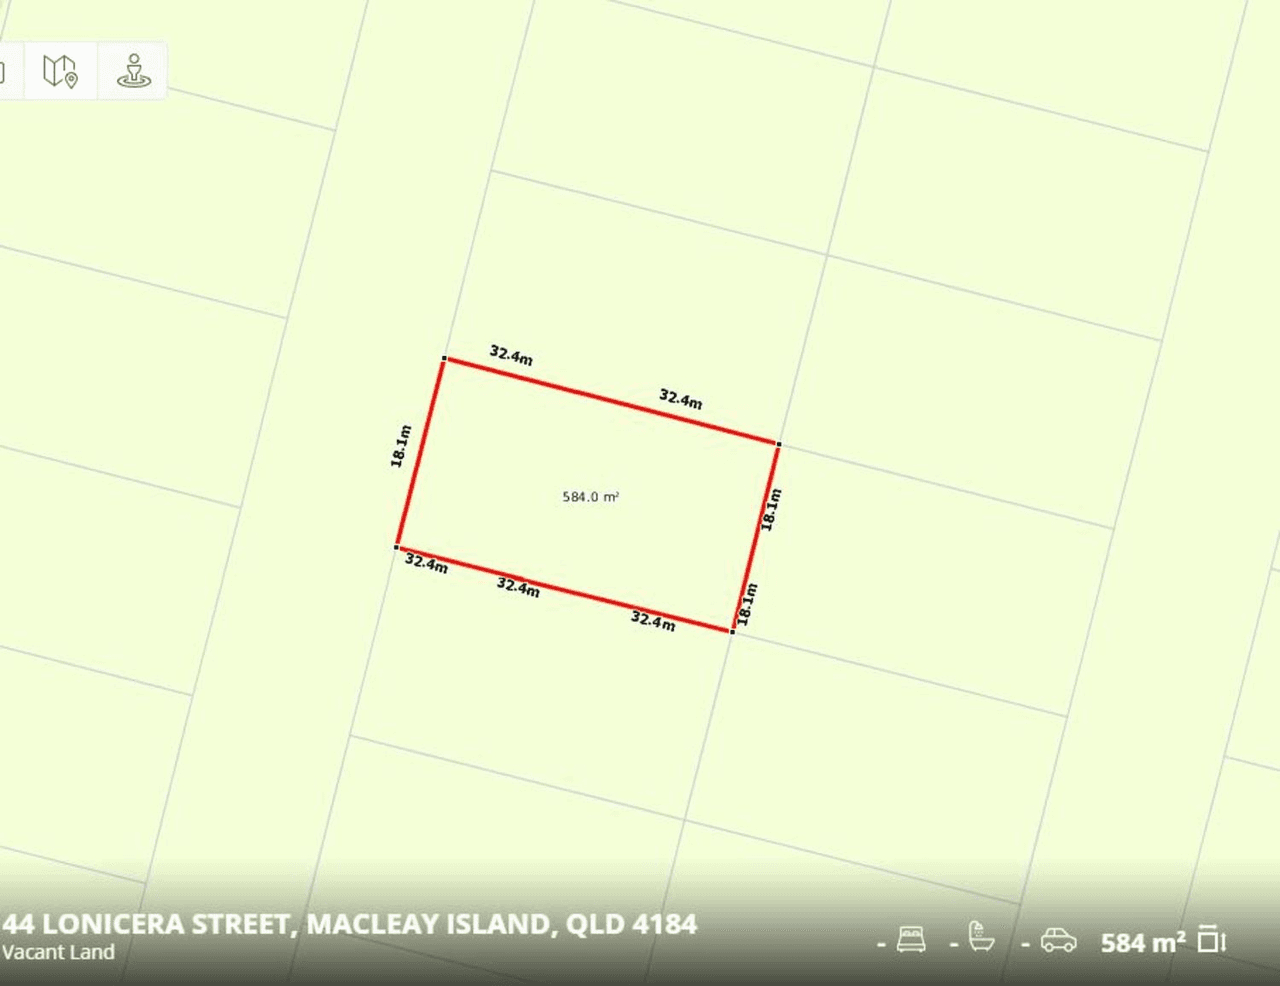 44 Lonicera Street, Macleay Island, QLD 4184